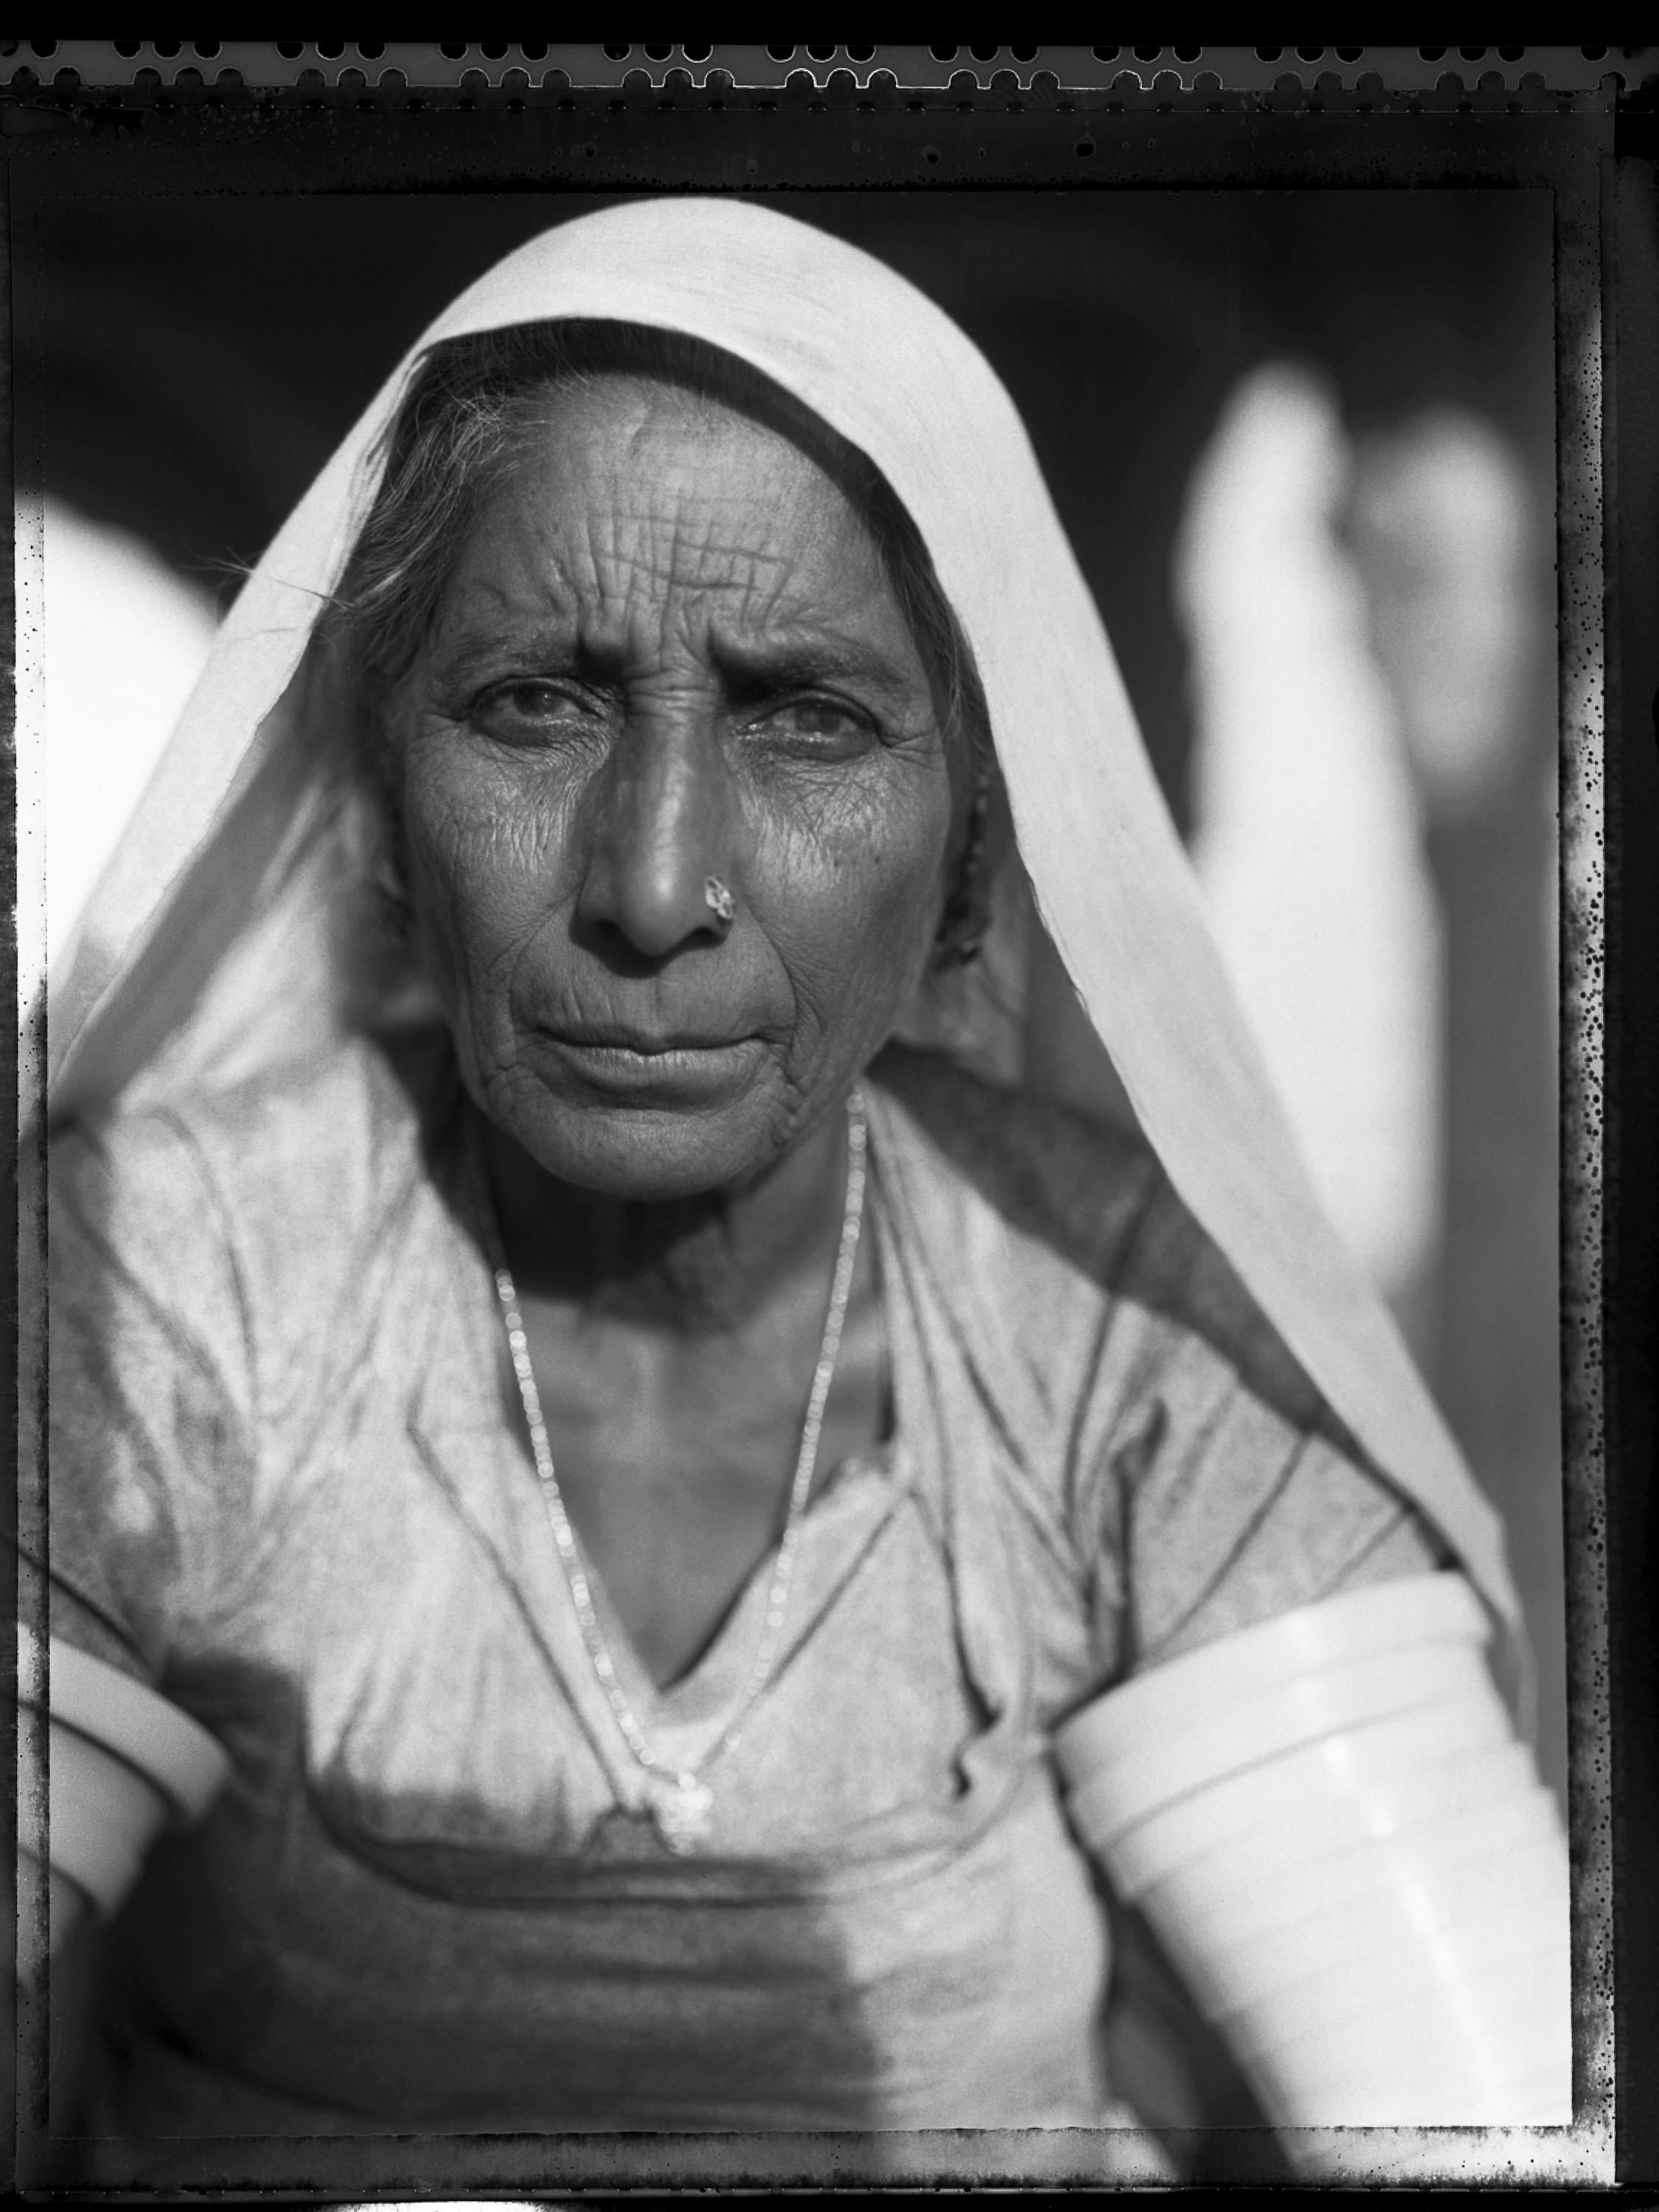 Carlo Bevilacqua Black and White Photograph - Jaisalmer Woman - Rajastan -India (from Indian Stills series )